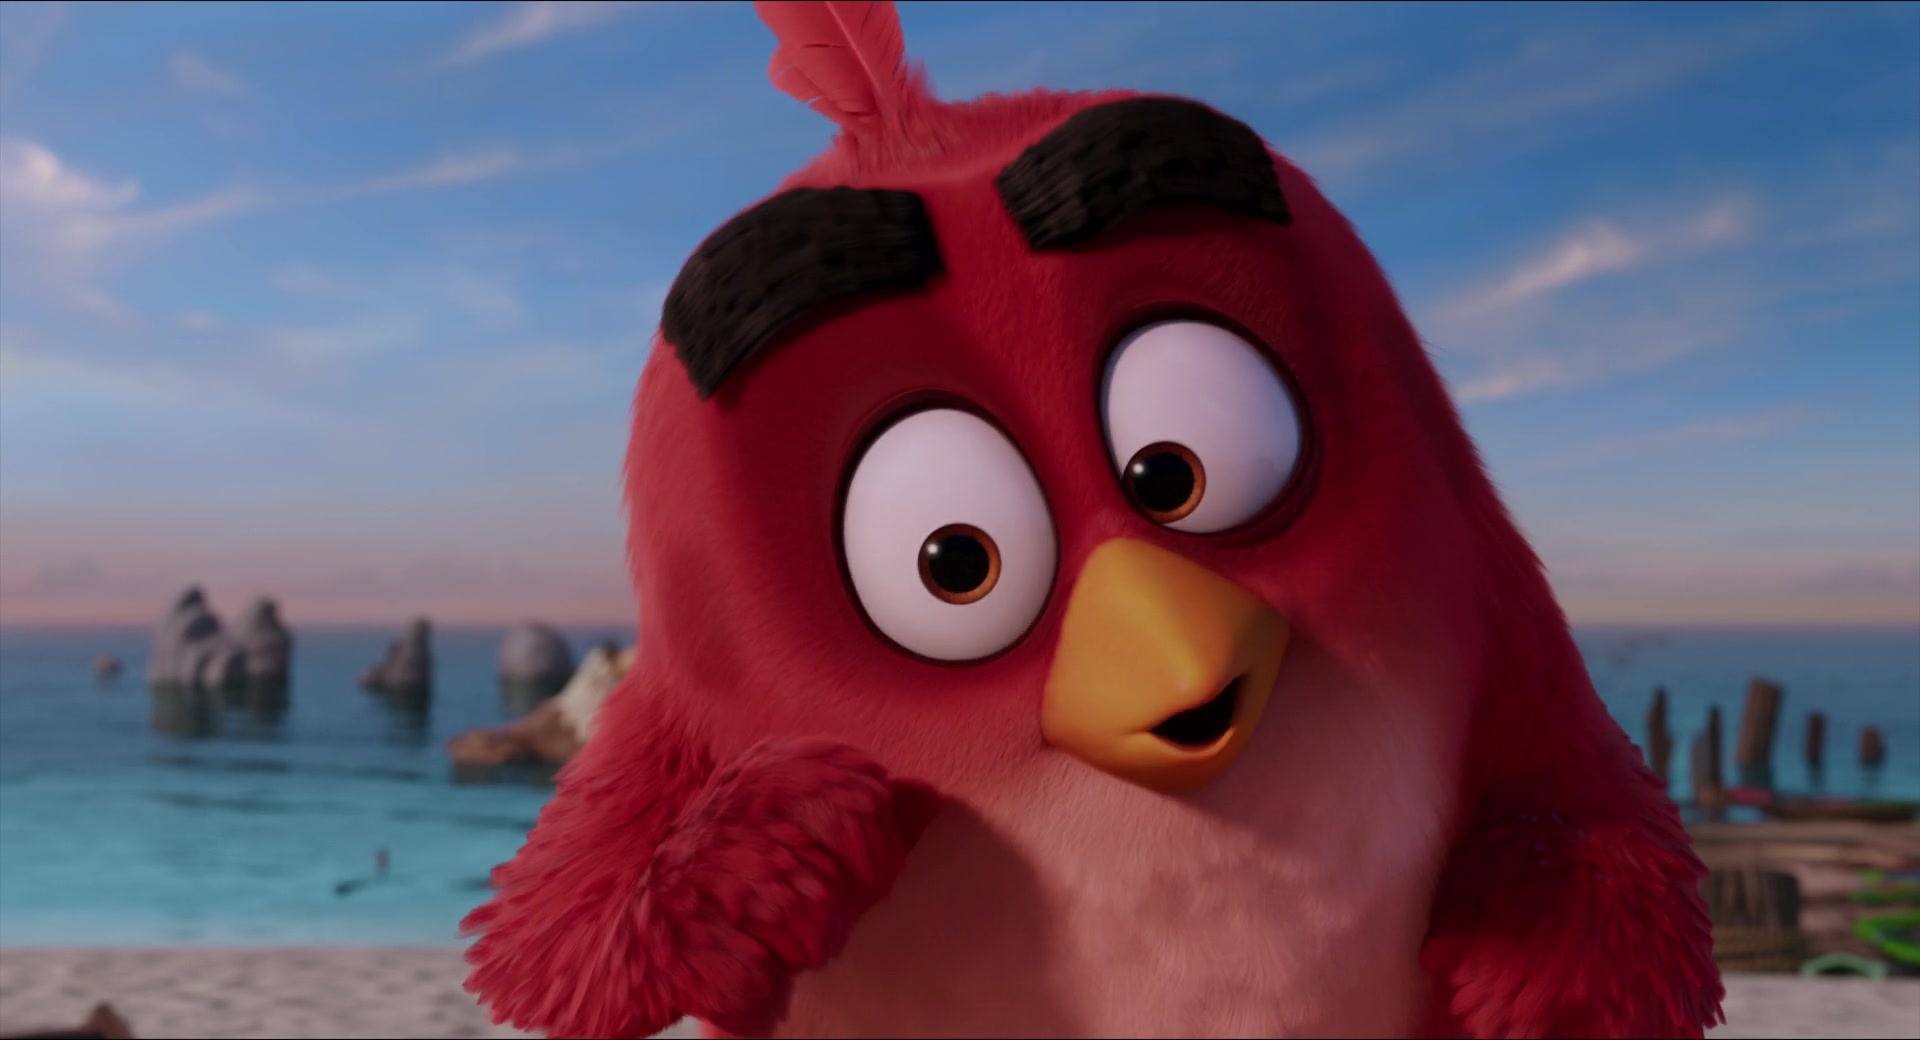 Angry birds 1.5 2. Энгри бердз красный из мультика. Энгри бердз красная птица из мультфильма.